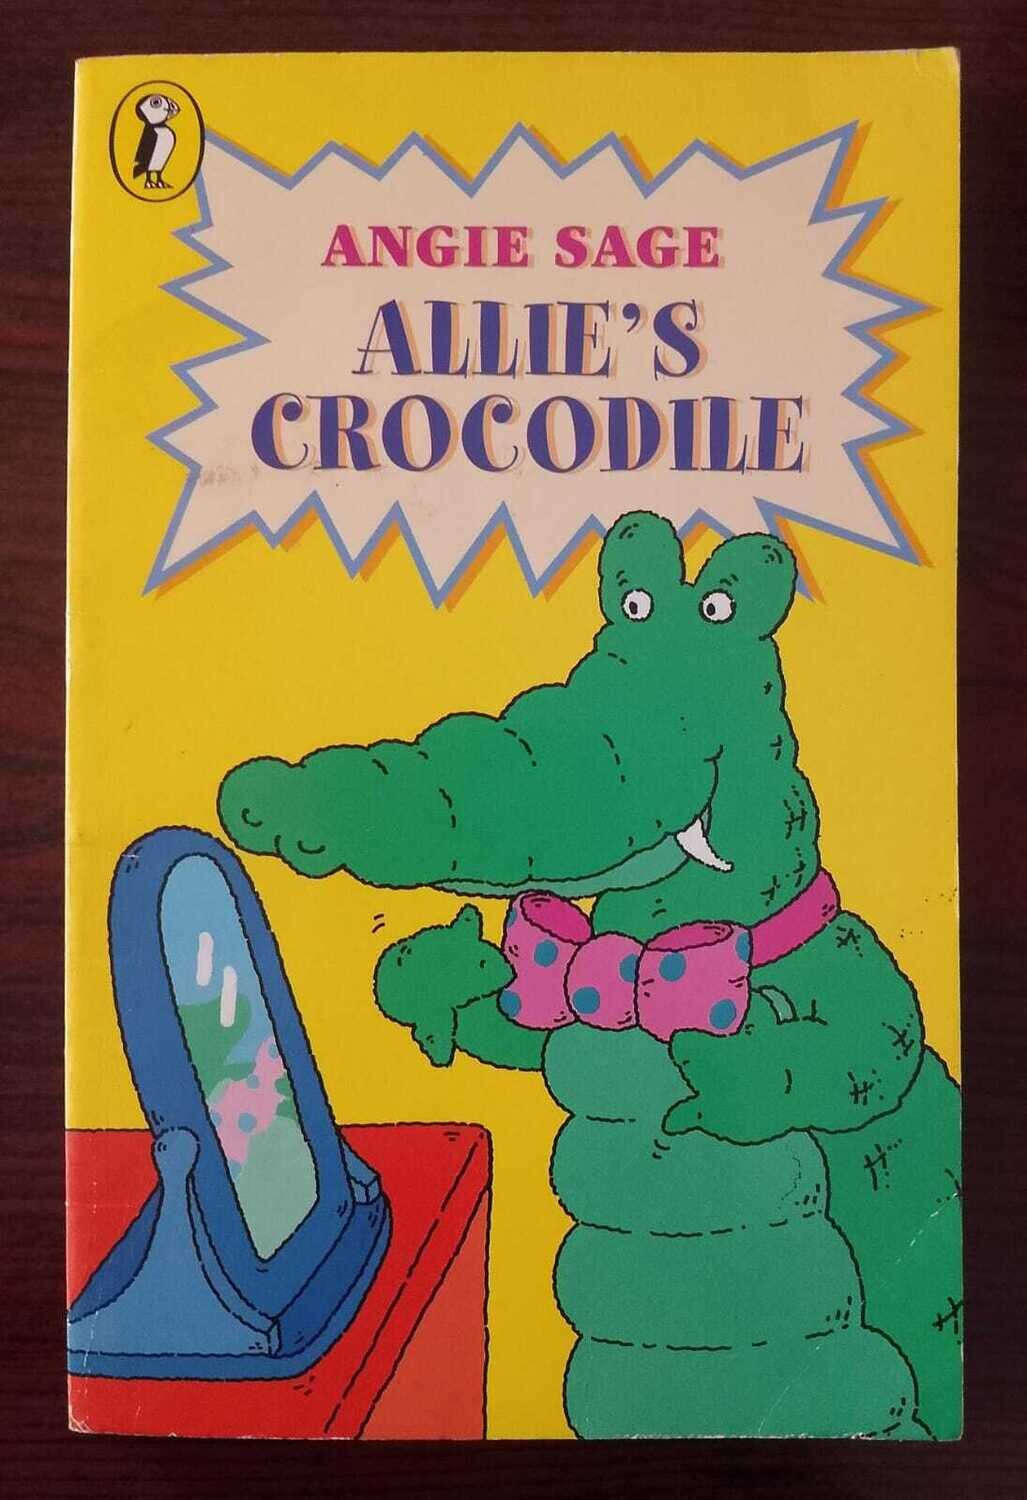 Angie sage allie's crocodile